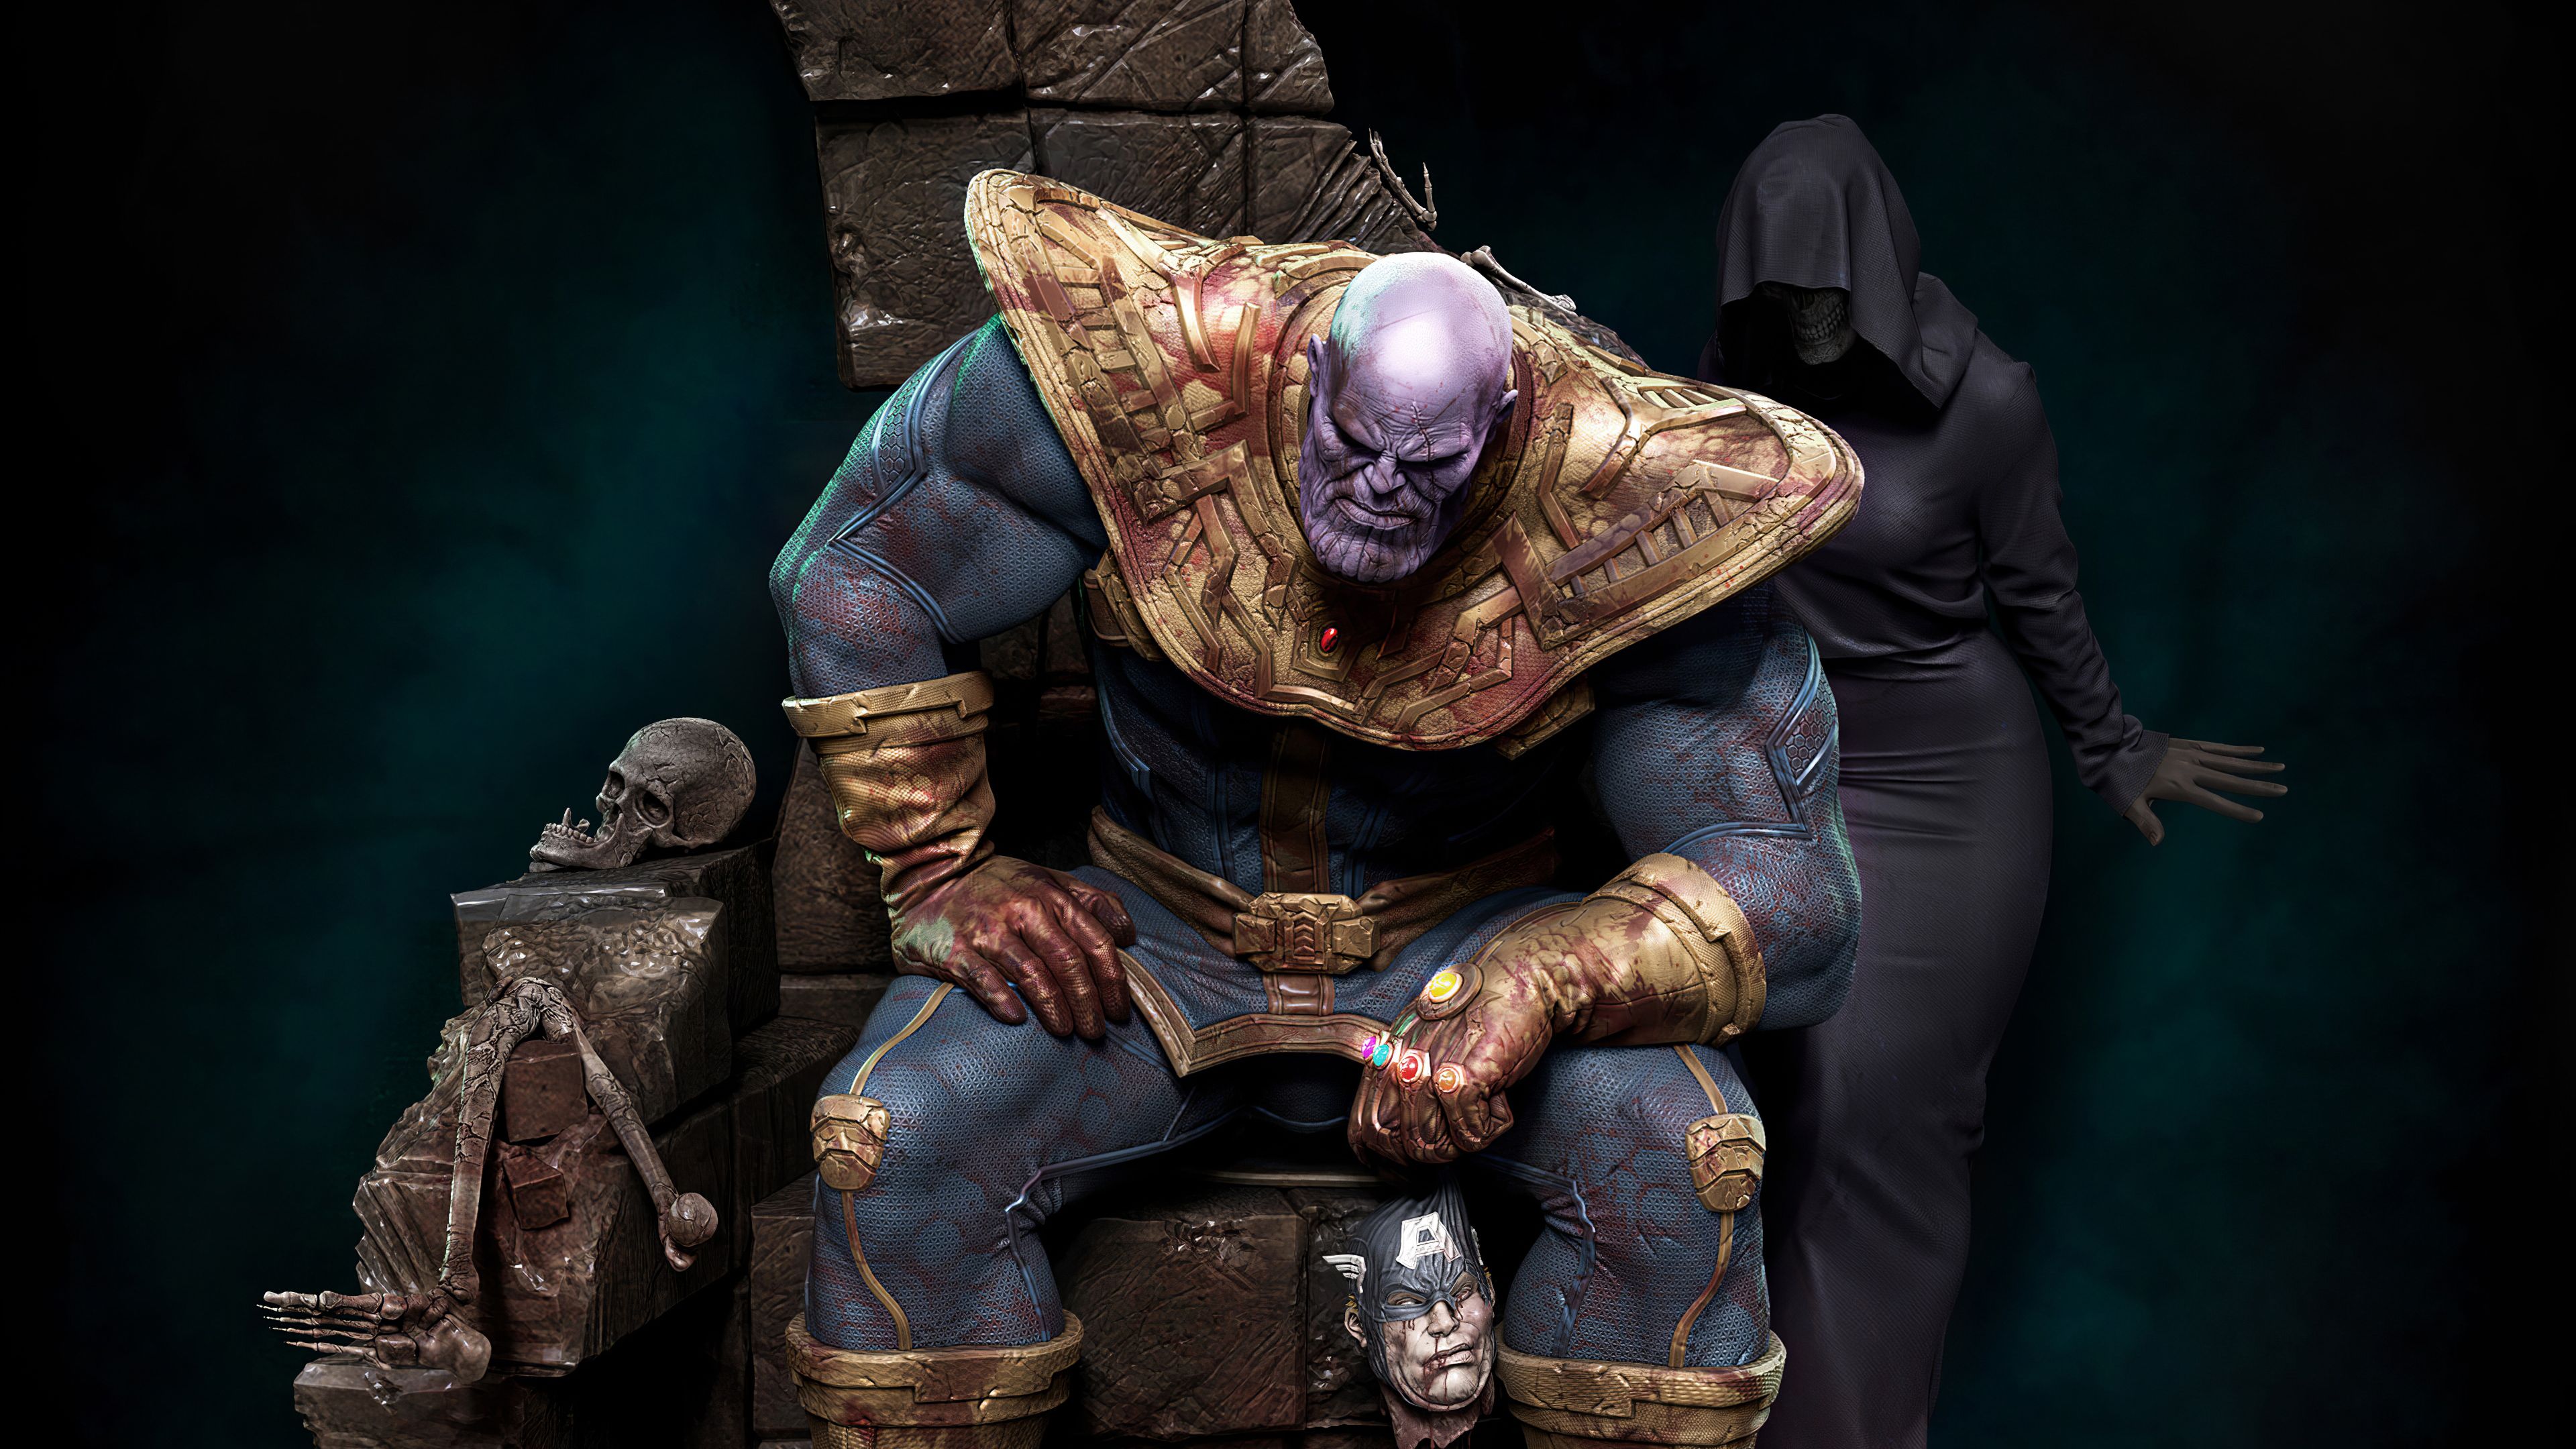 Thanos 4k 2020 Art, HD Superheroes, 4k Wallpapers, Image